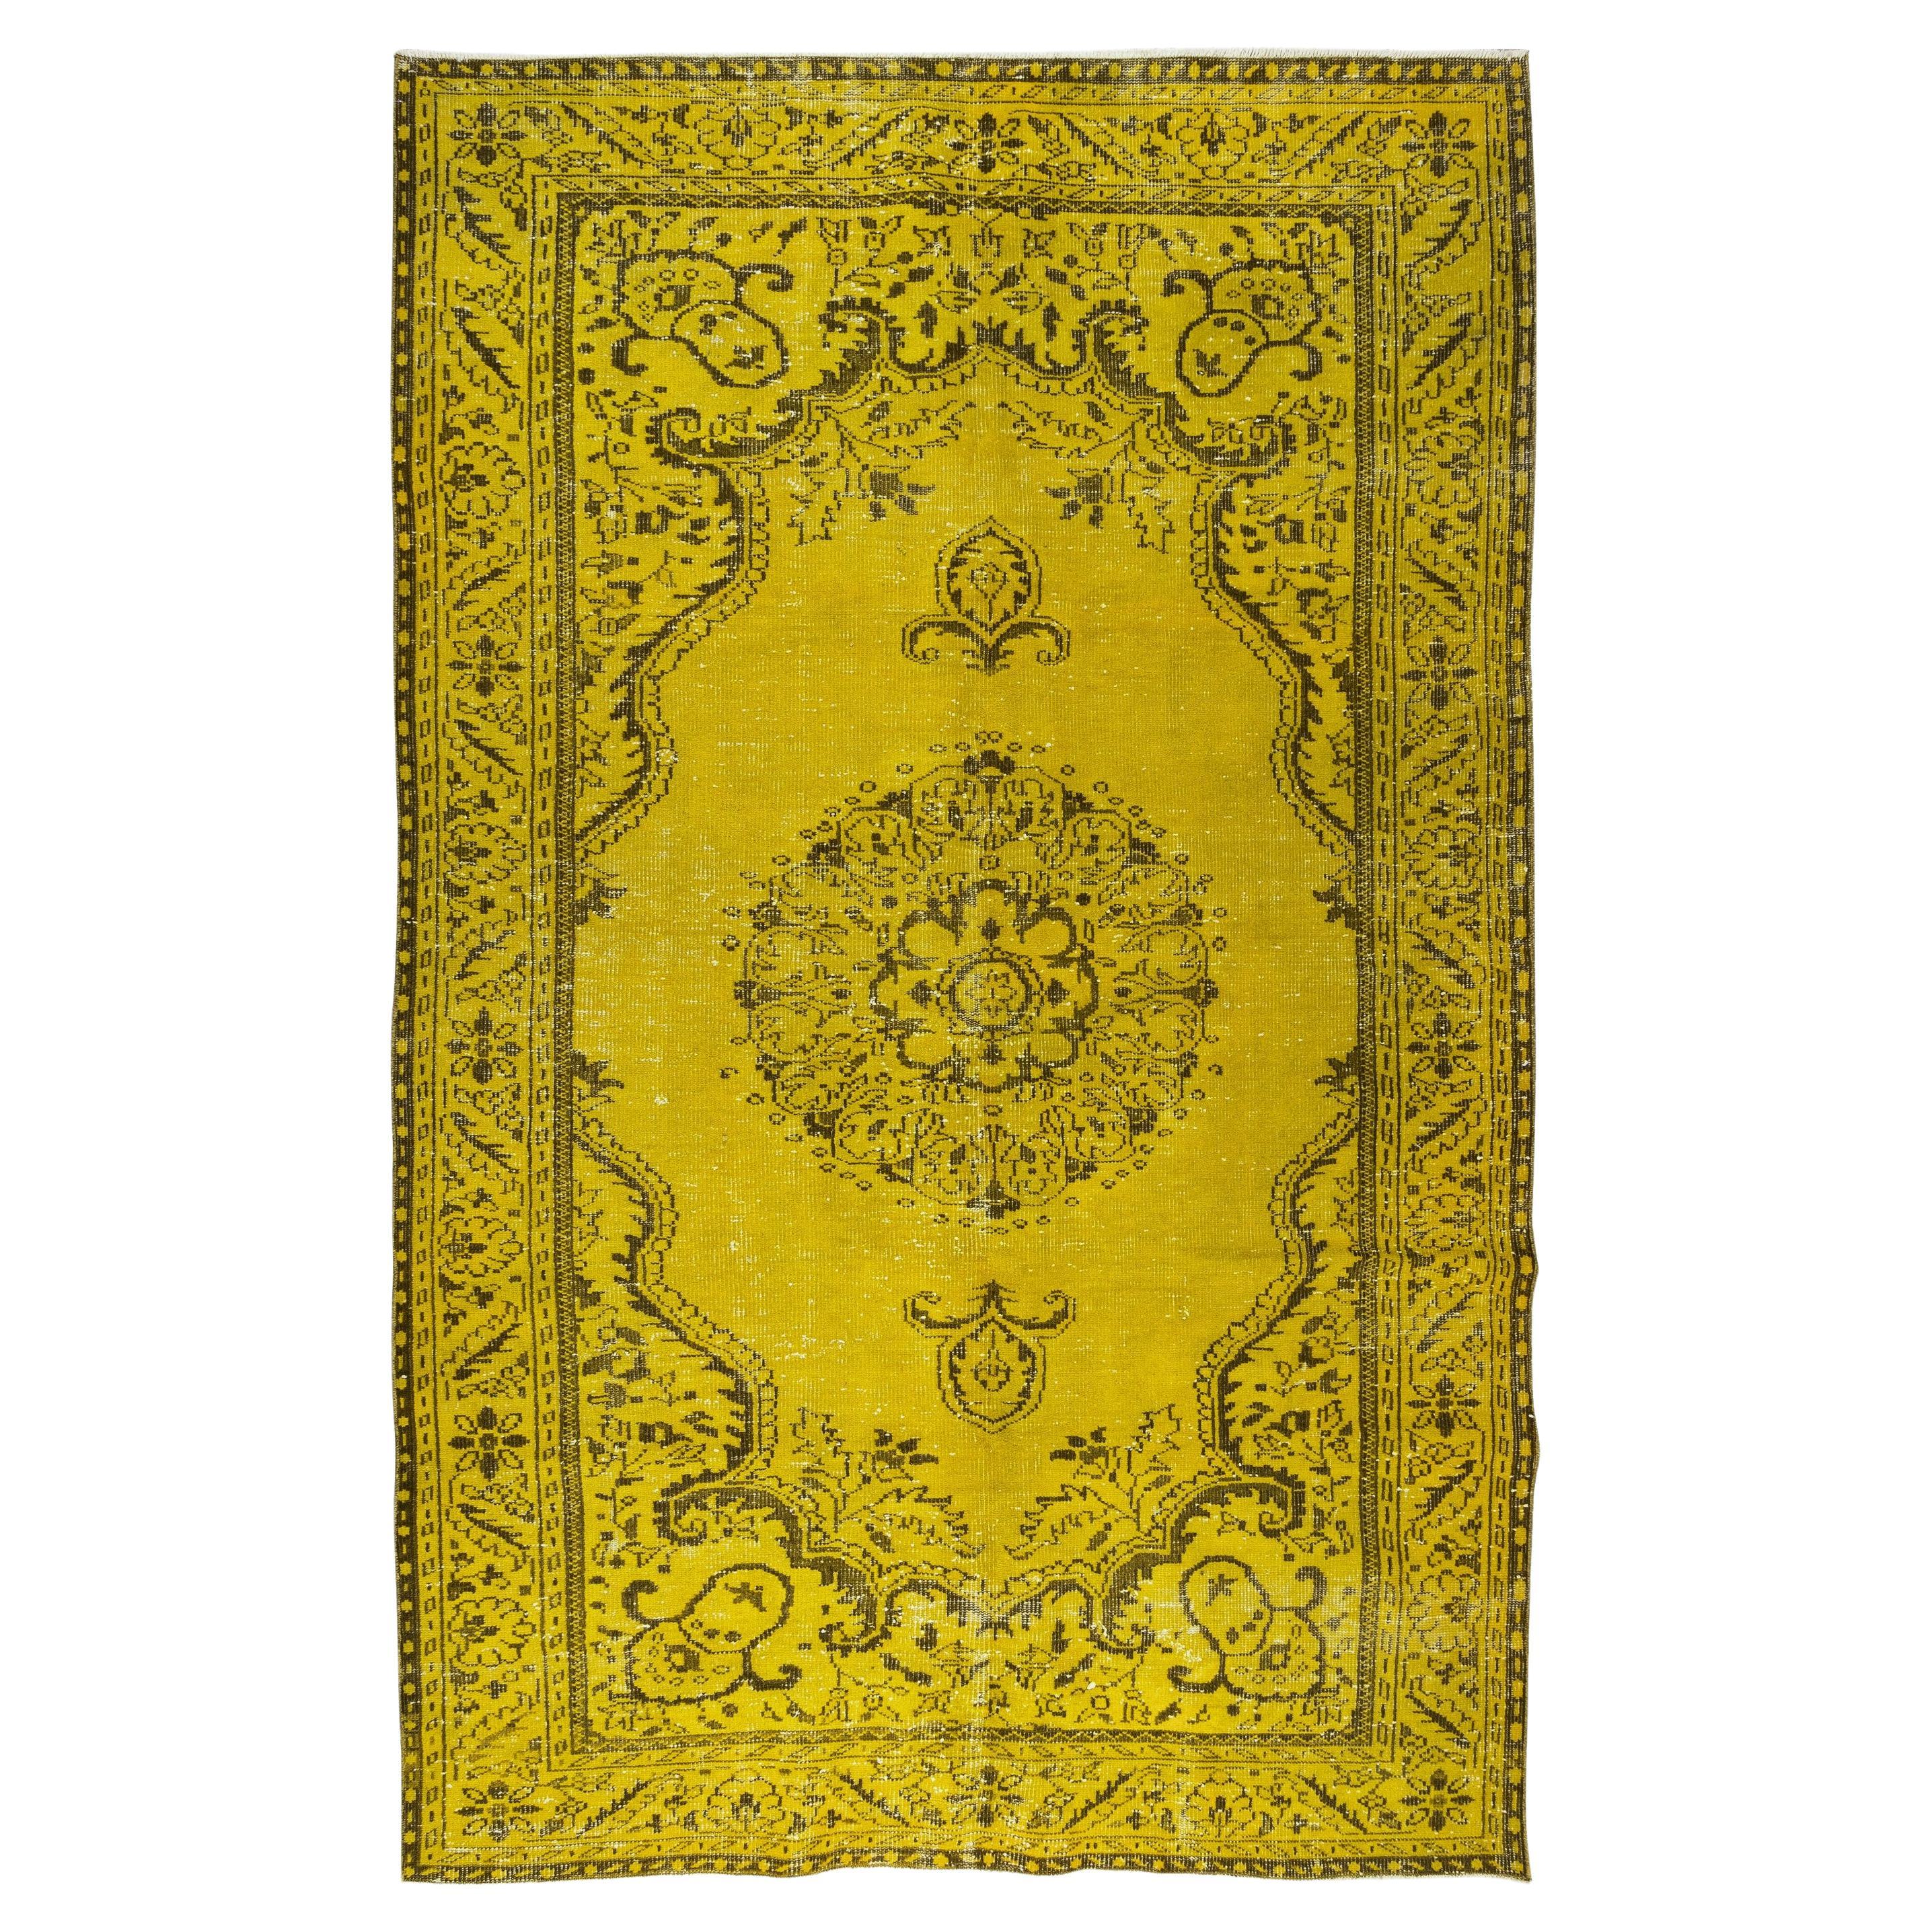 6.2x10.3 Ft Modern Yellow Area Rug. Handmade Turkish Vintage Wool Carpet